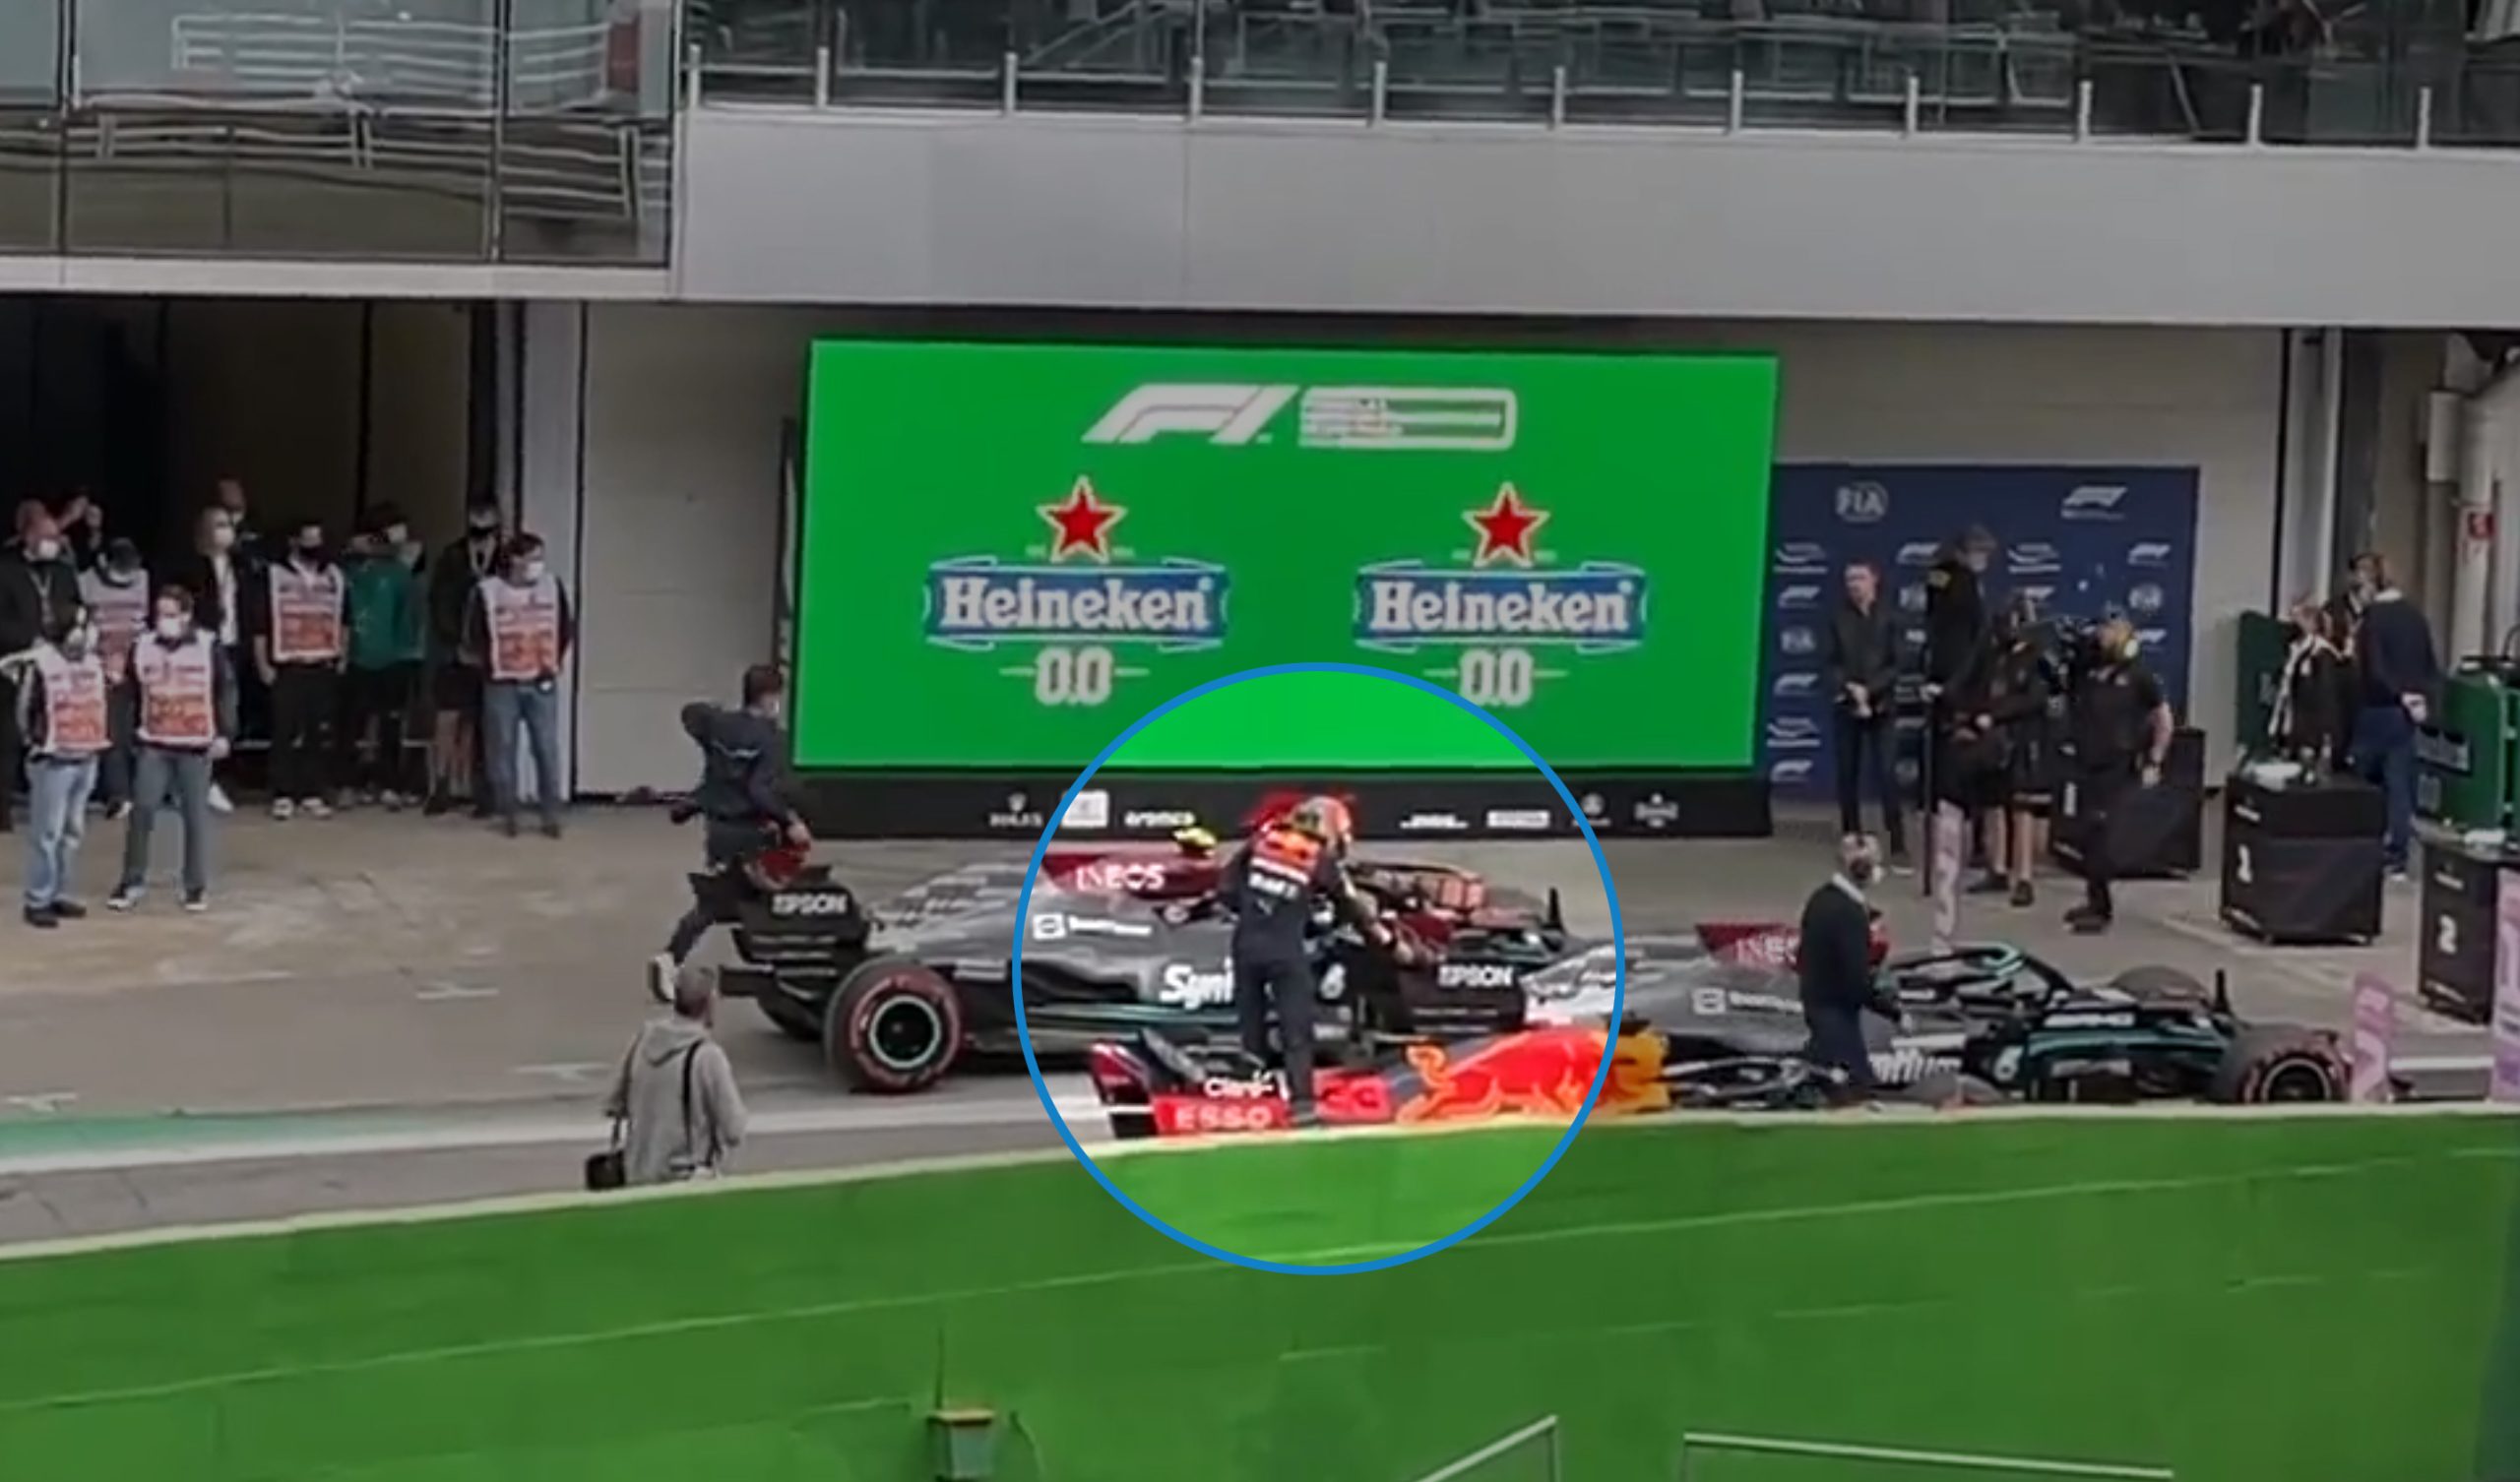 Verstappen faces investigation over parc ferme rules breach after touching Hamiltons car · RaceFans